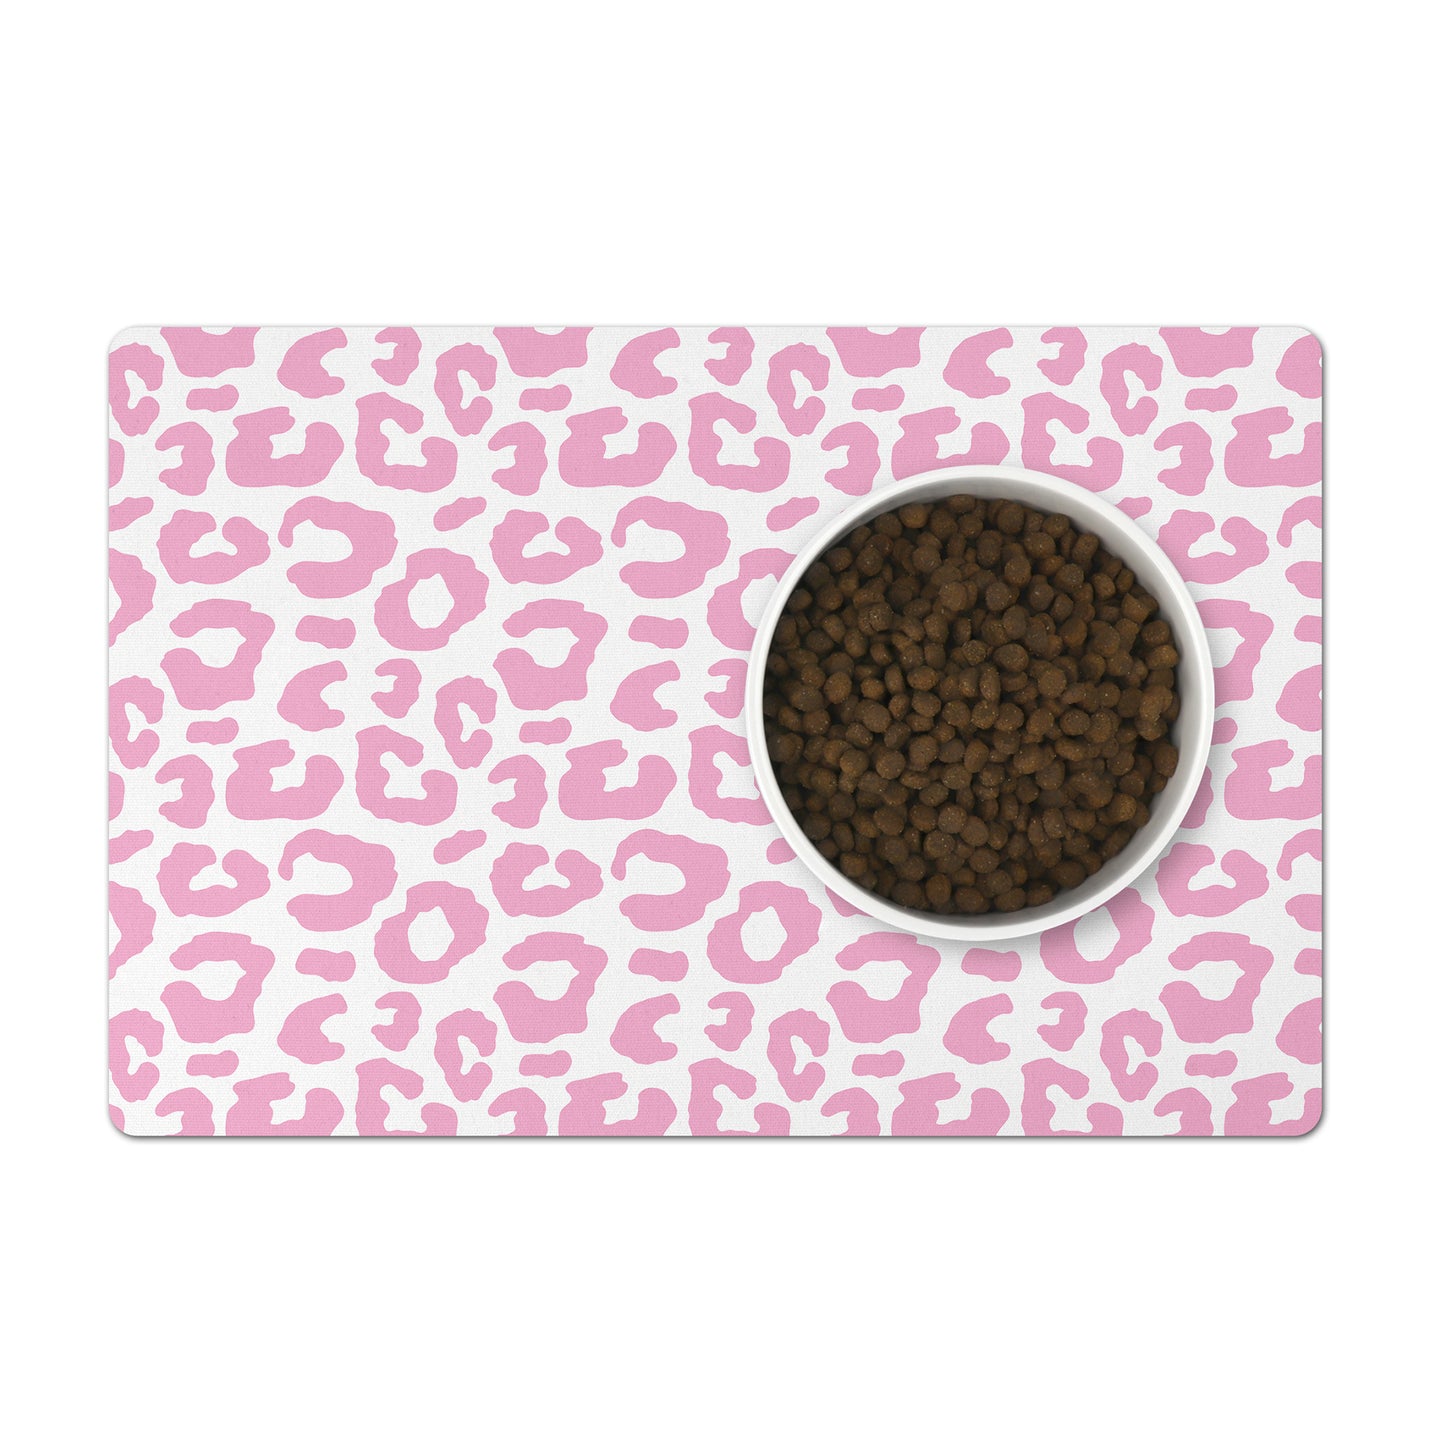 Pet Feeding Mat, Leopard Print, Light Pink and White